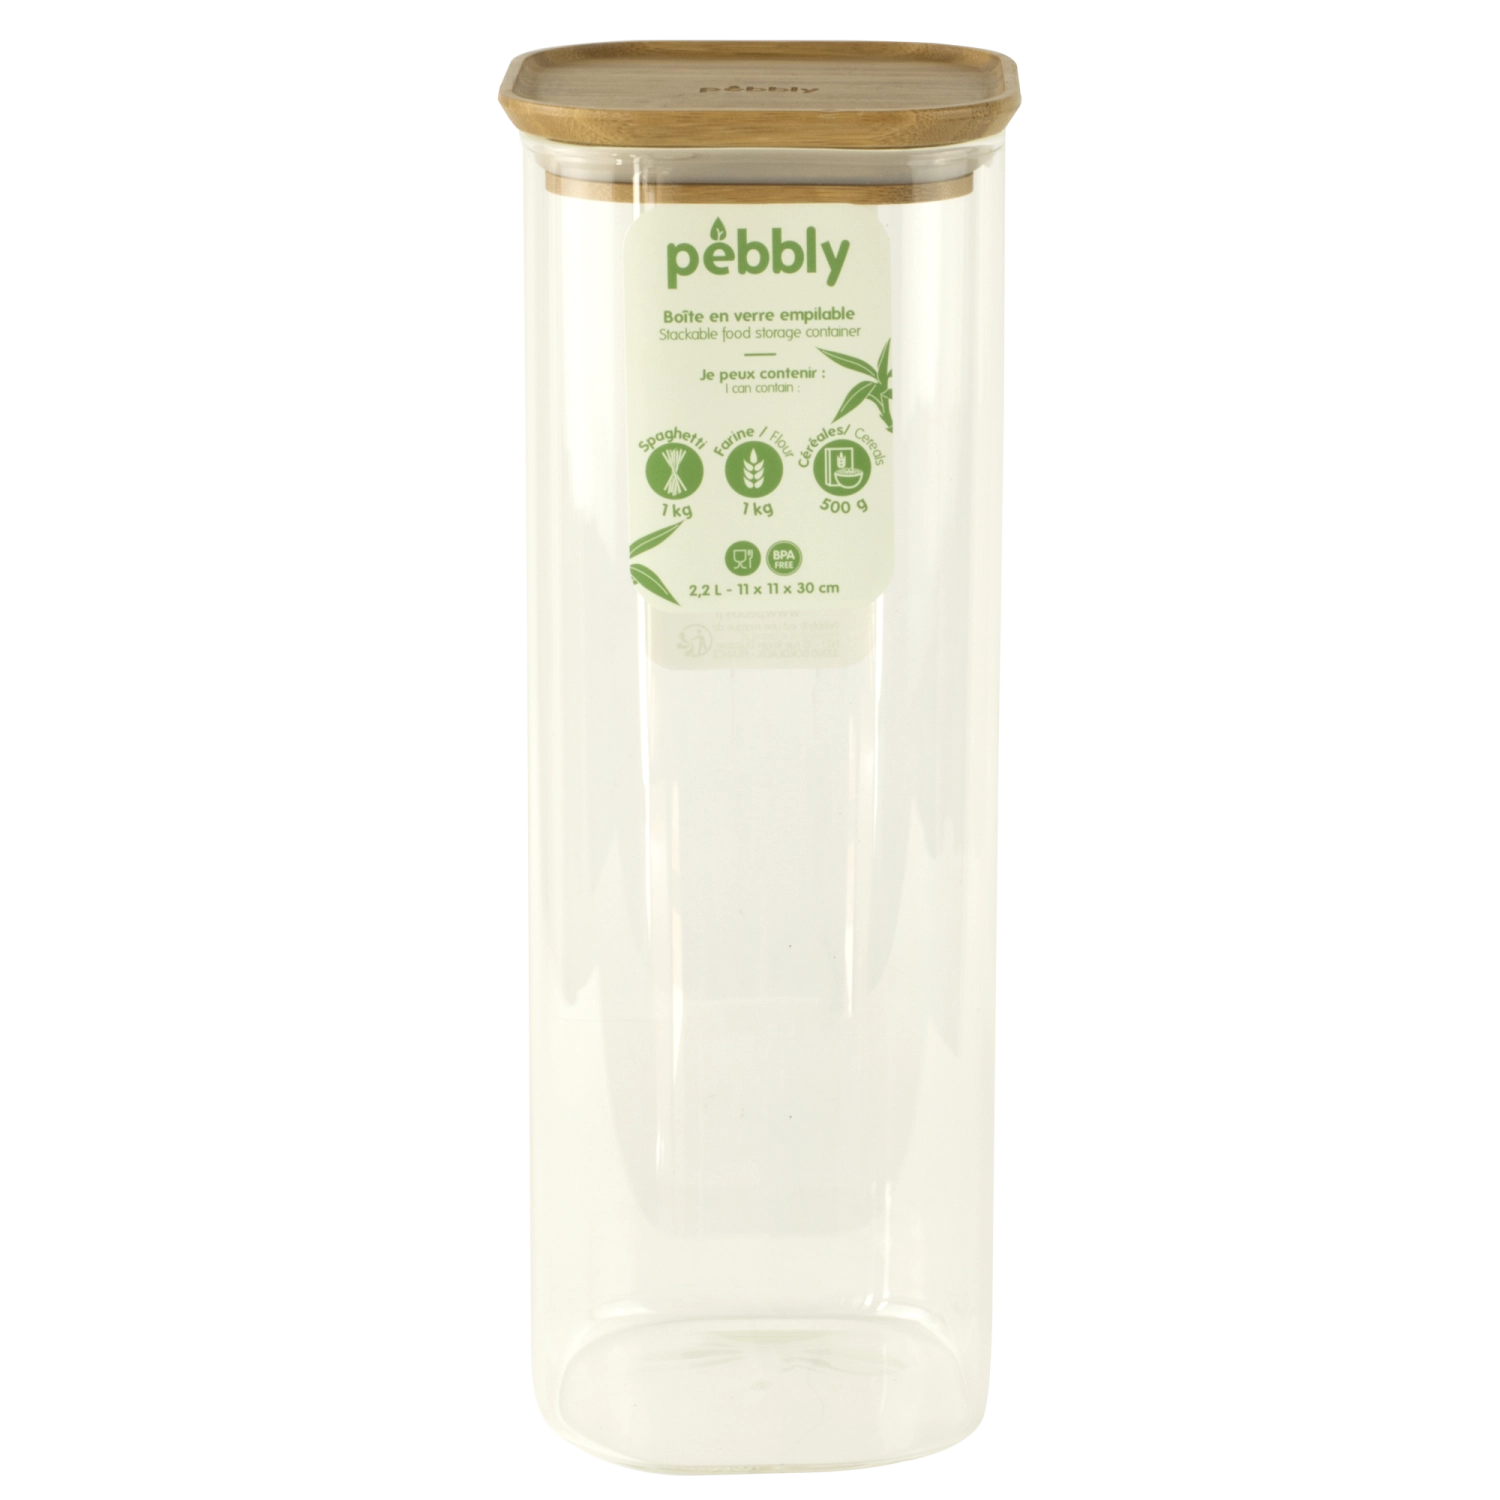 Pebbly bocal avec couvercle en bambou